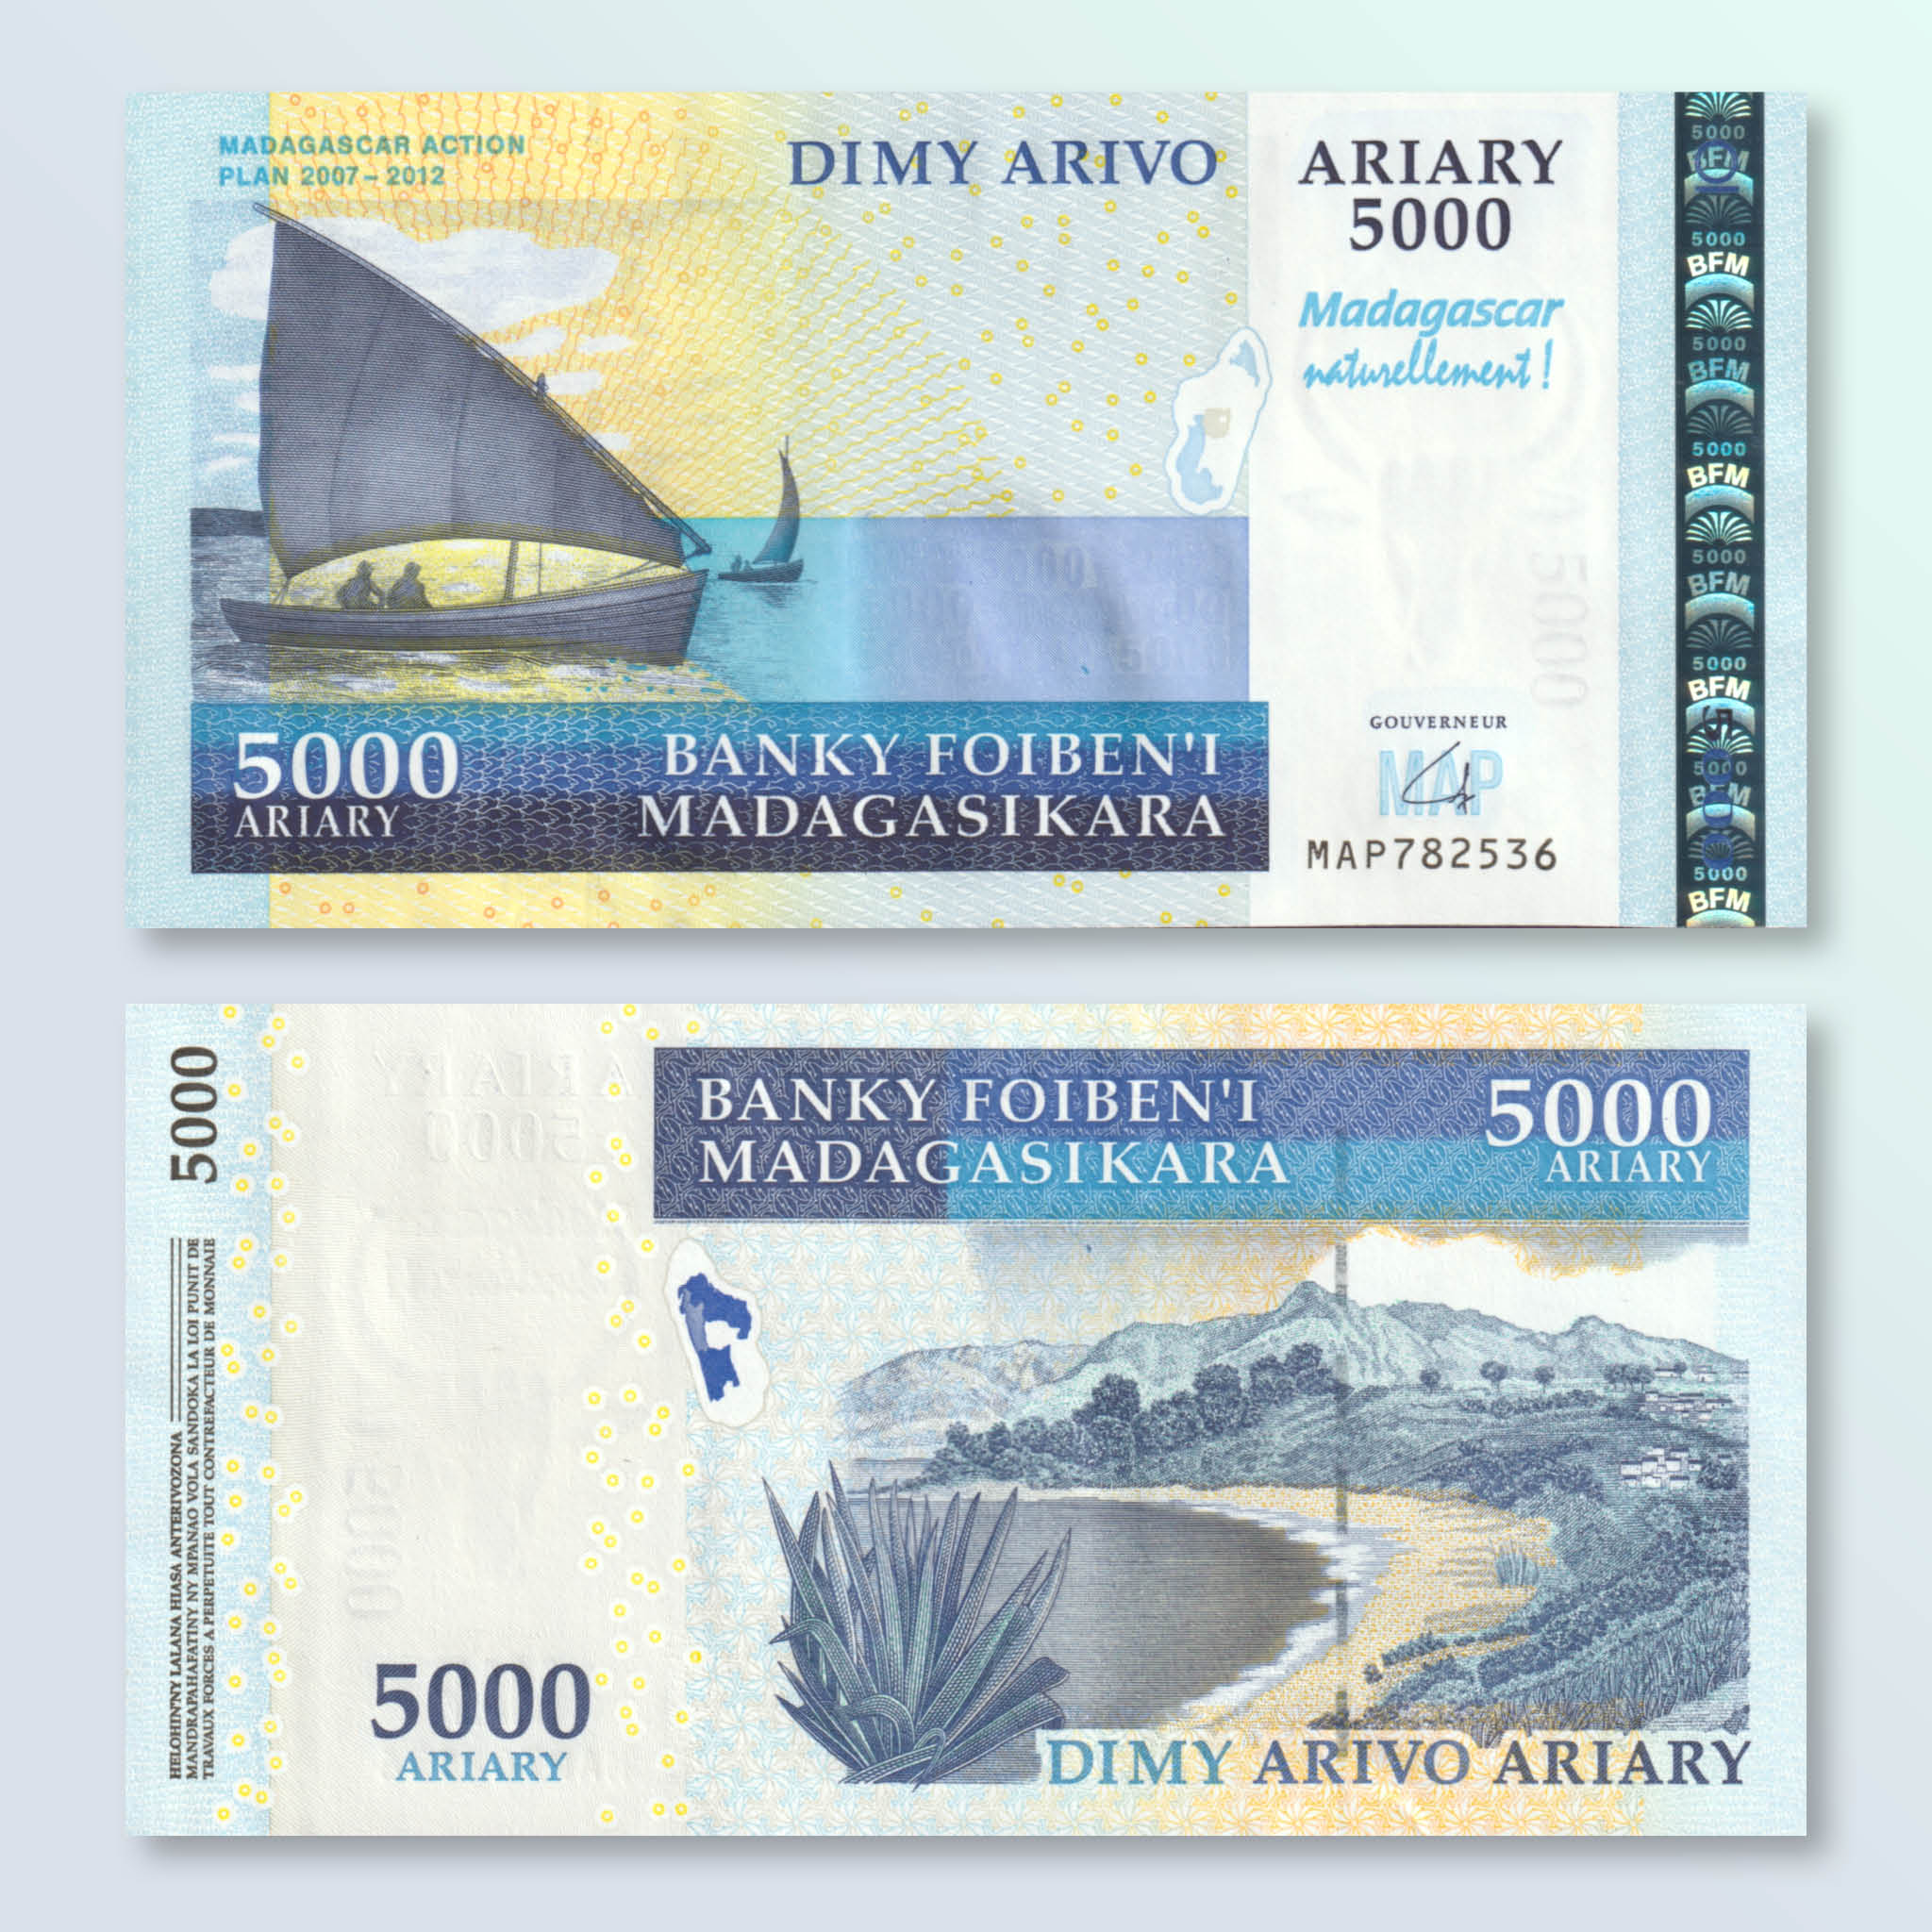 Madagascar 5000 Ariary, 2007, B331a, P94a, UNC - Robert's World Money - World Banknotes